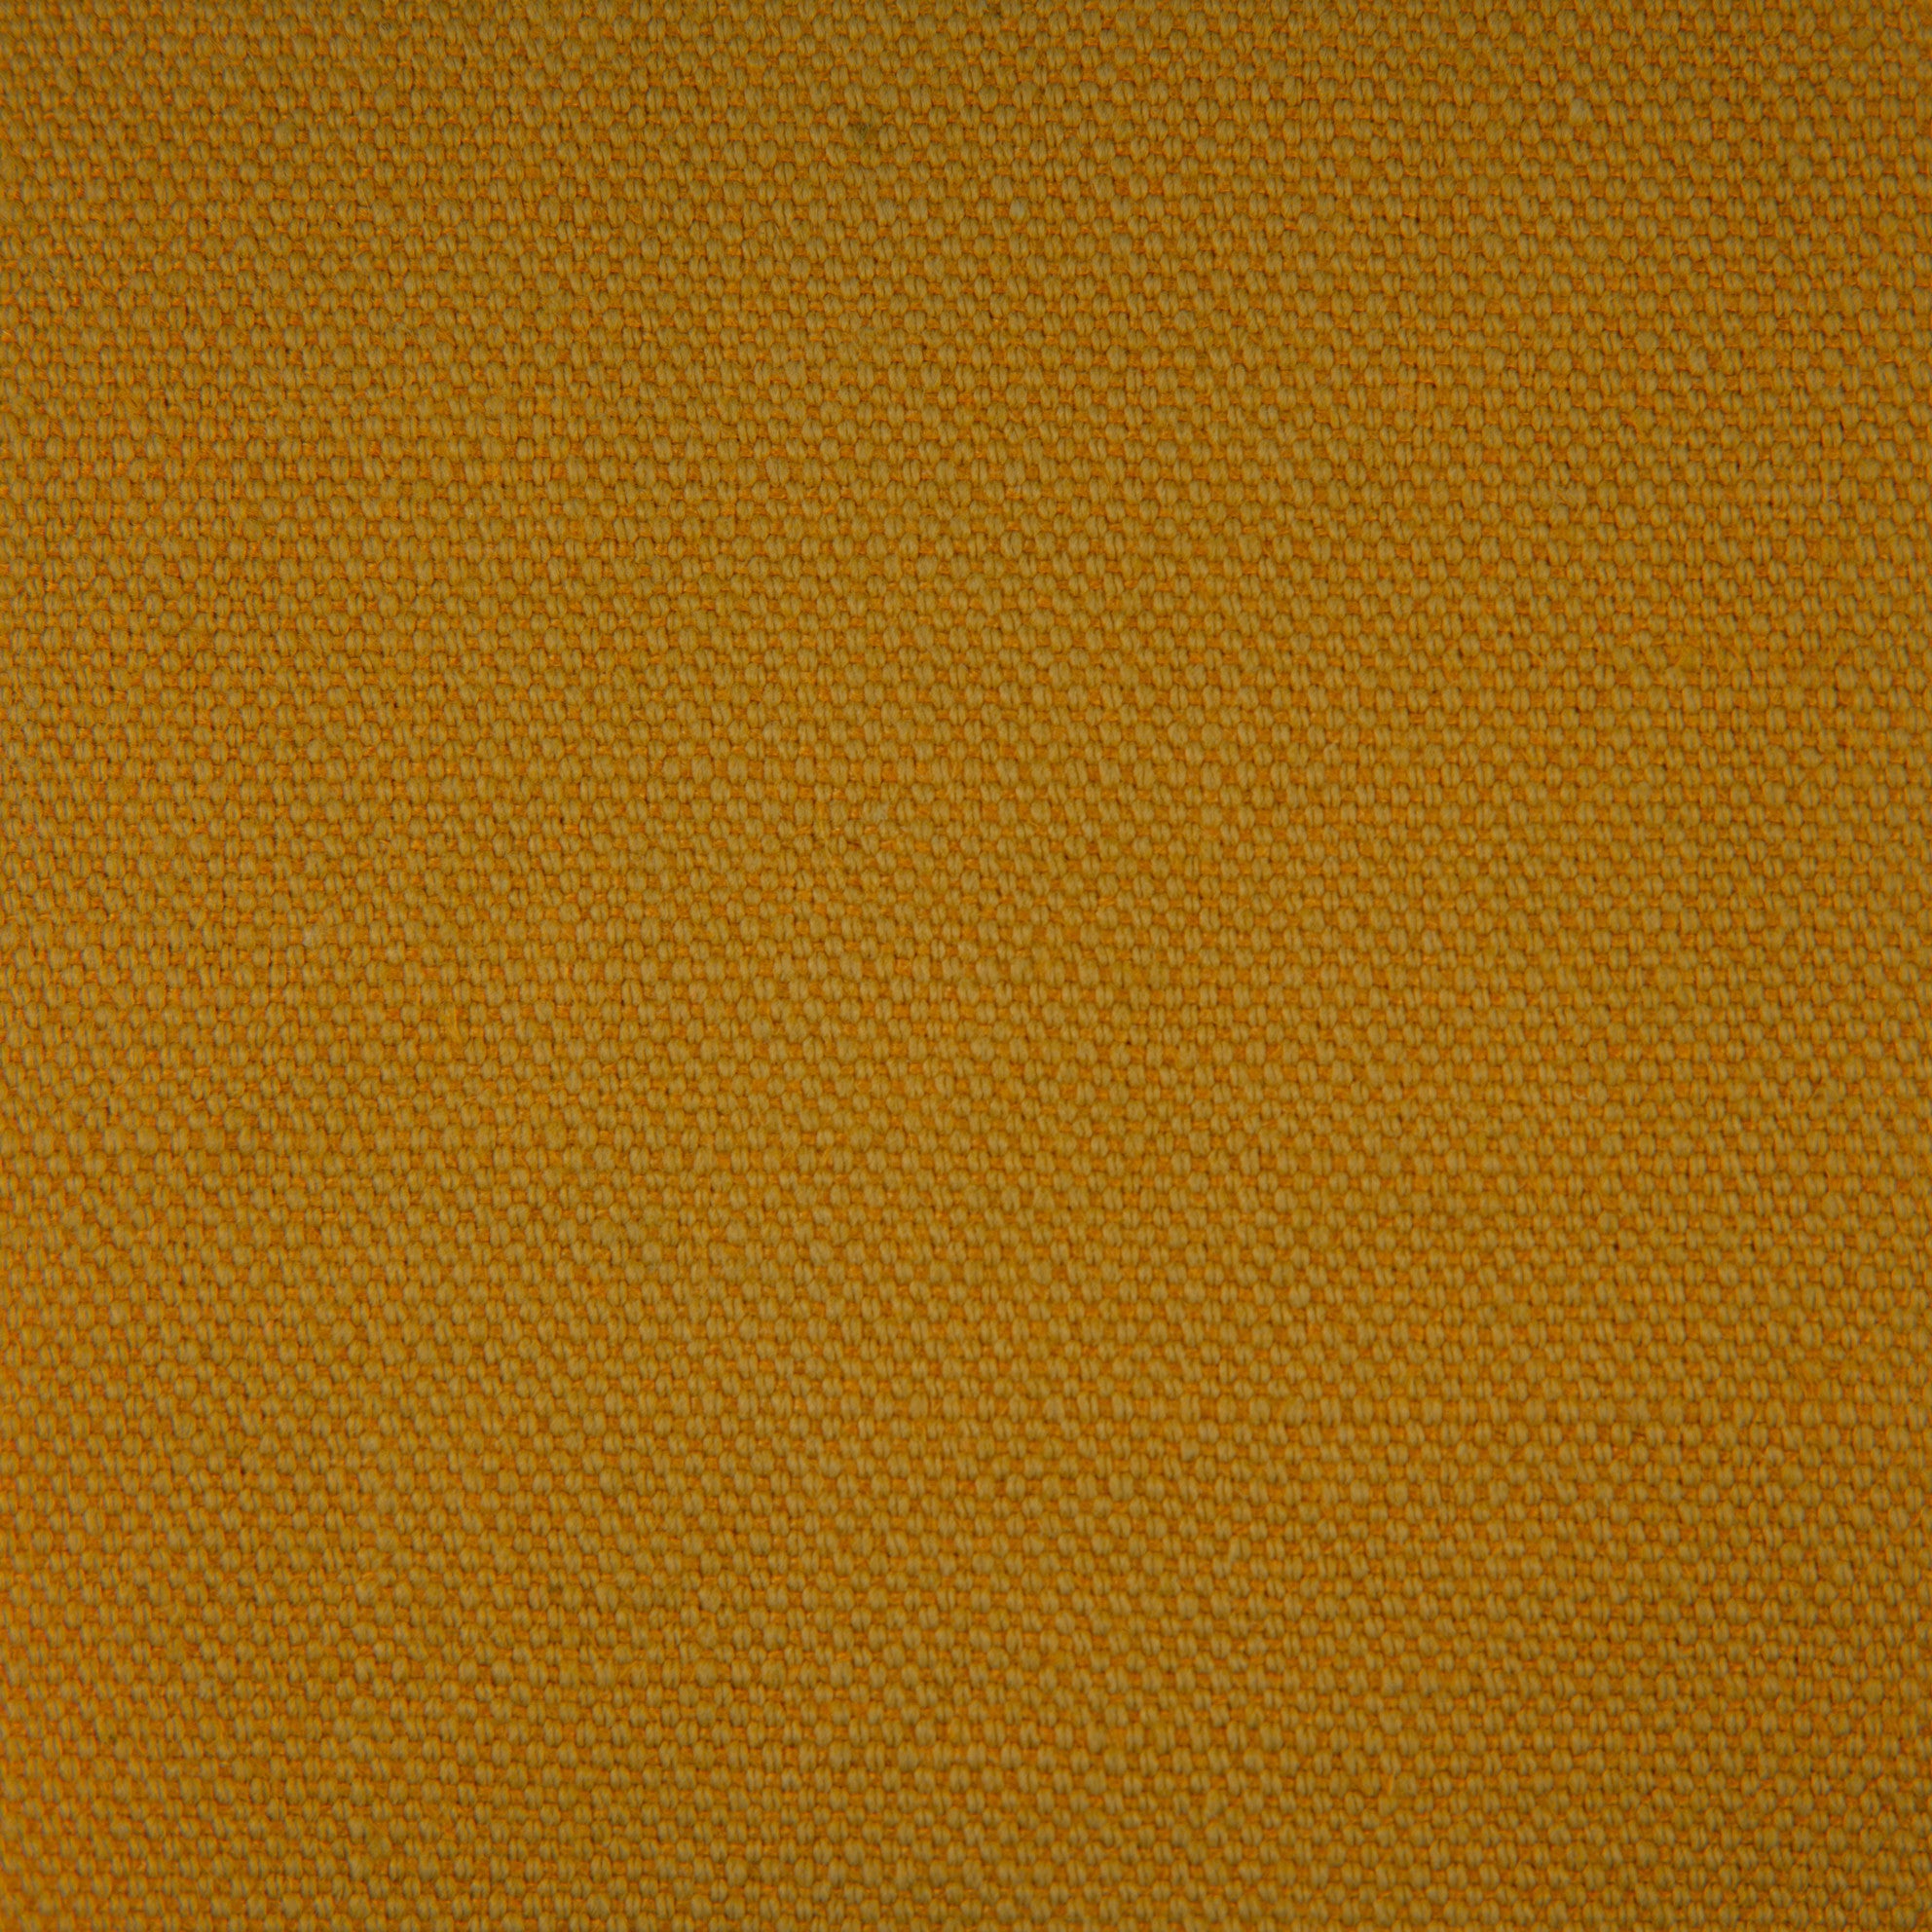 Woven Plain Fabric - Lynton 11/022 Curry | Nicholas Engert Interiors